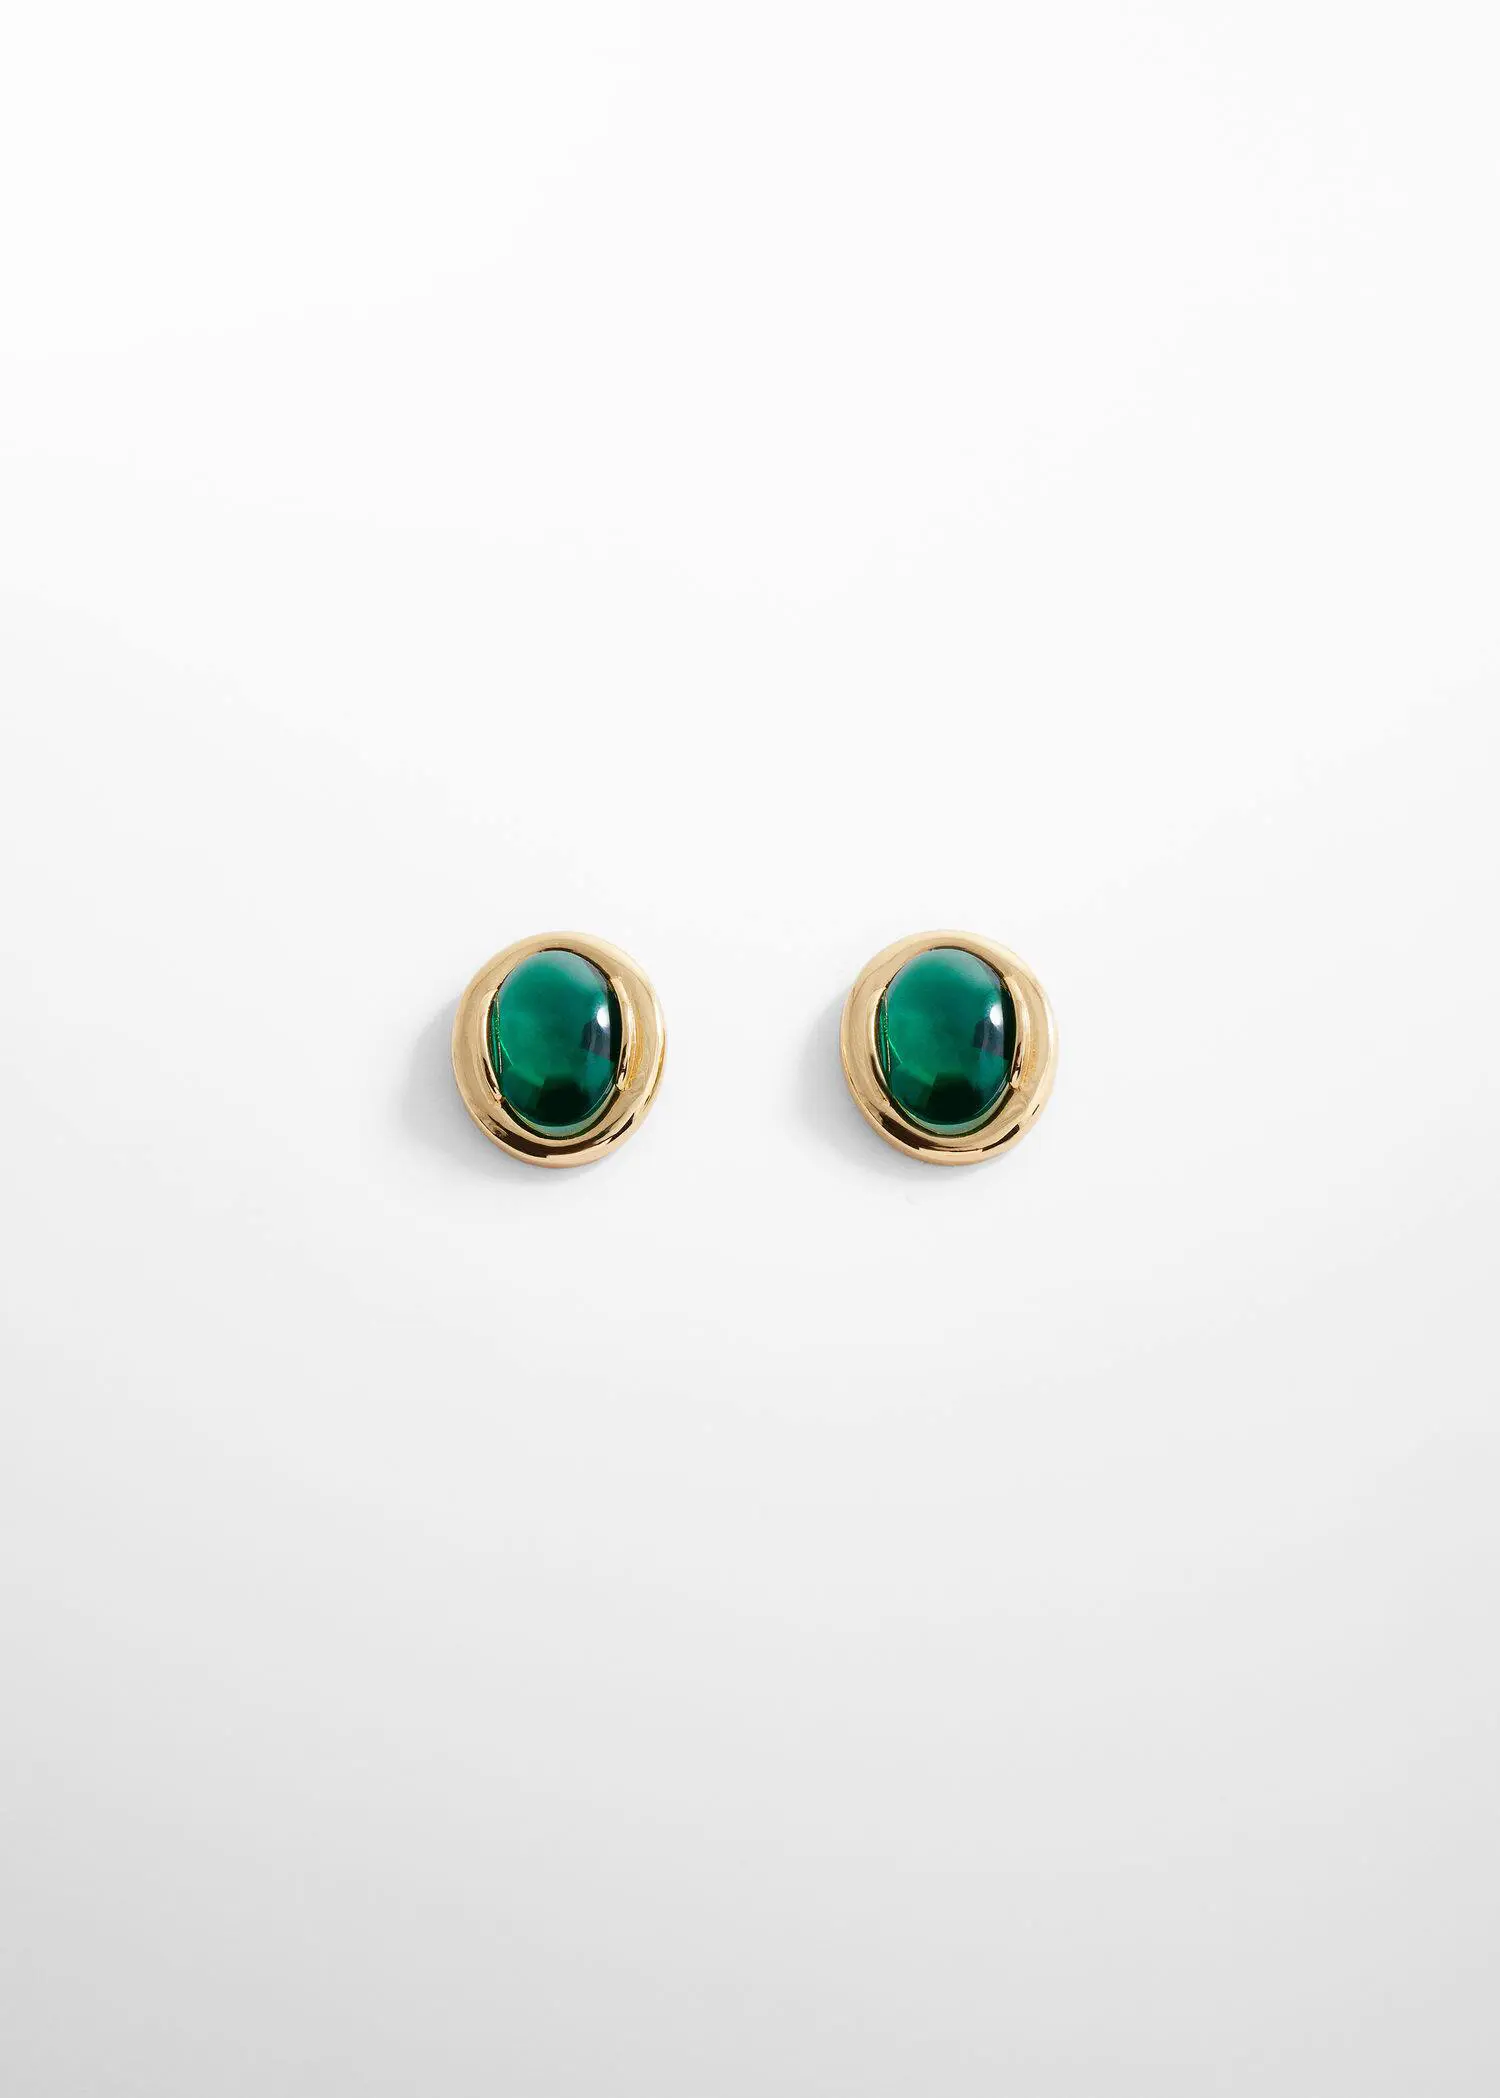 Mango Stones earrings. 1